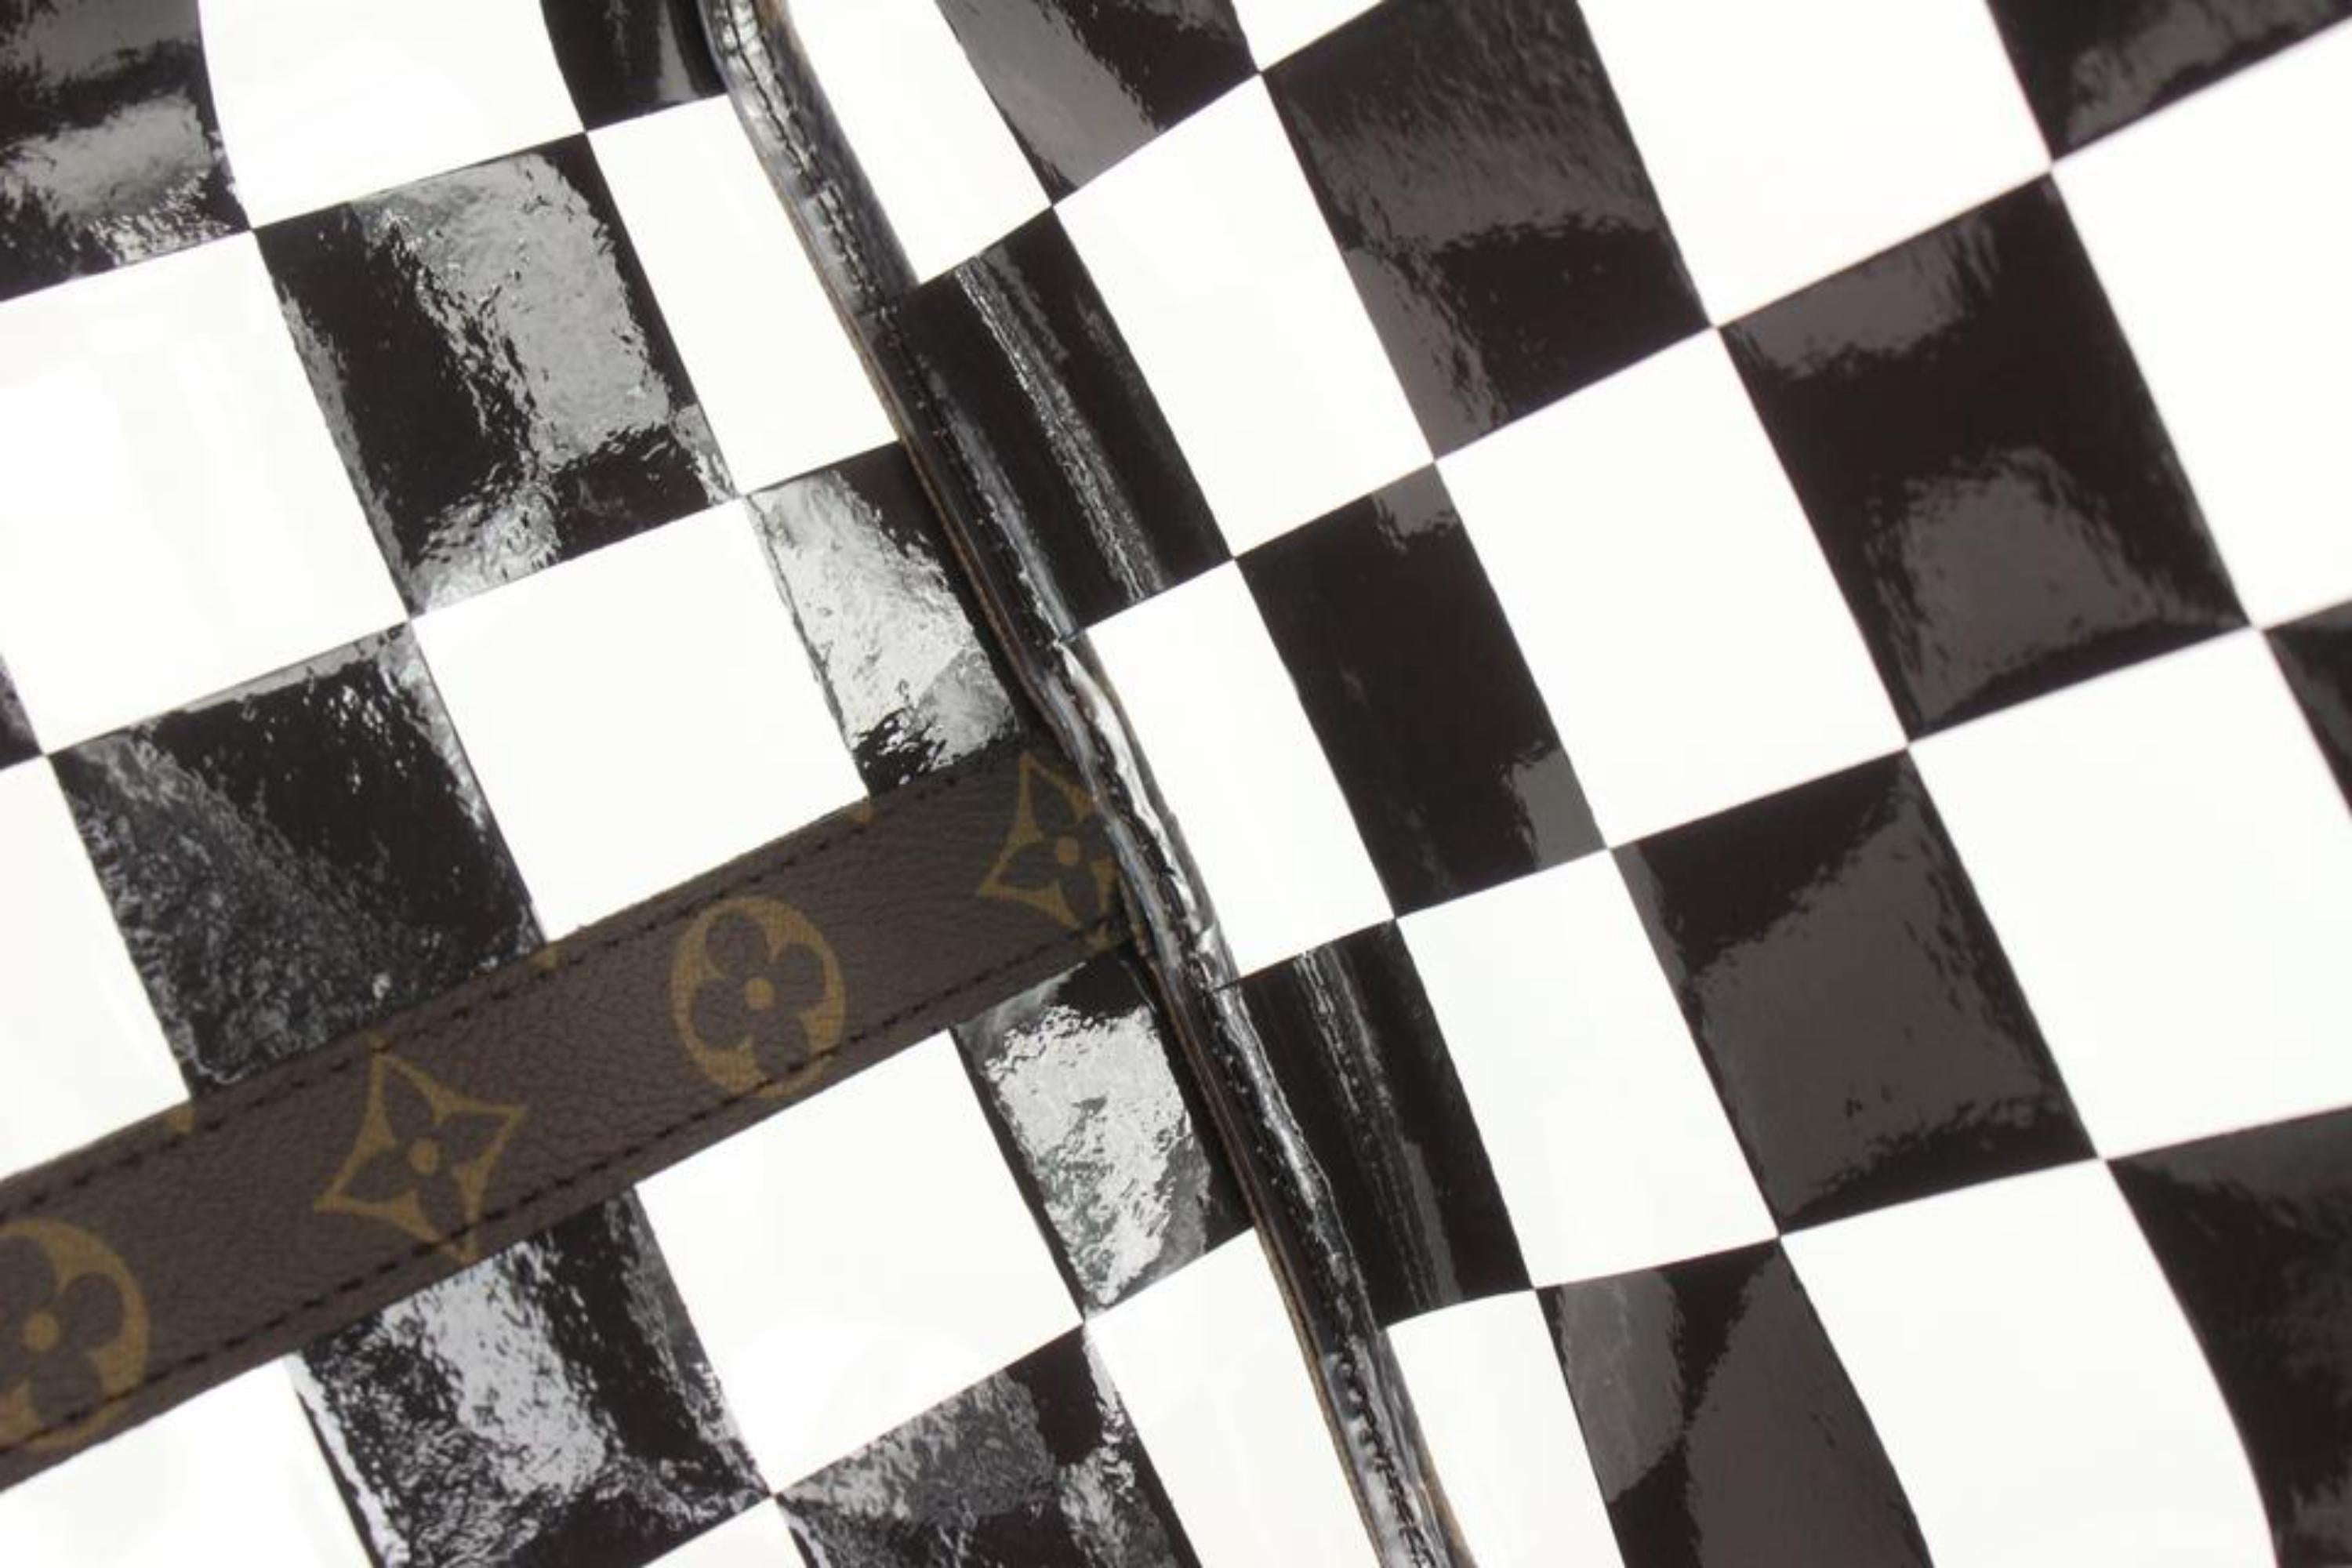 Louis Vuitton Keepall Bandouliere 50 Monogram Chess Brown/Clear